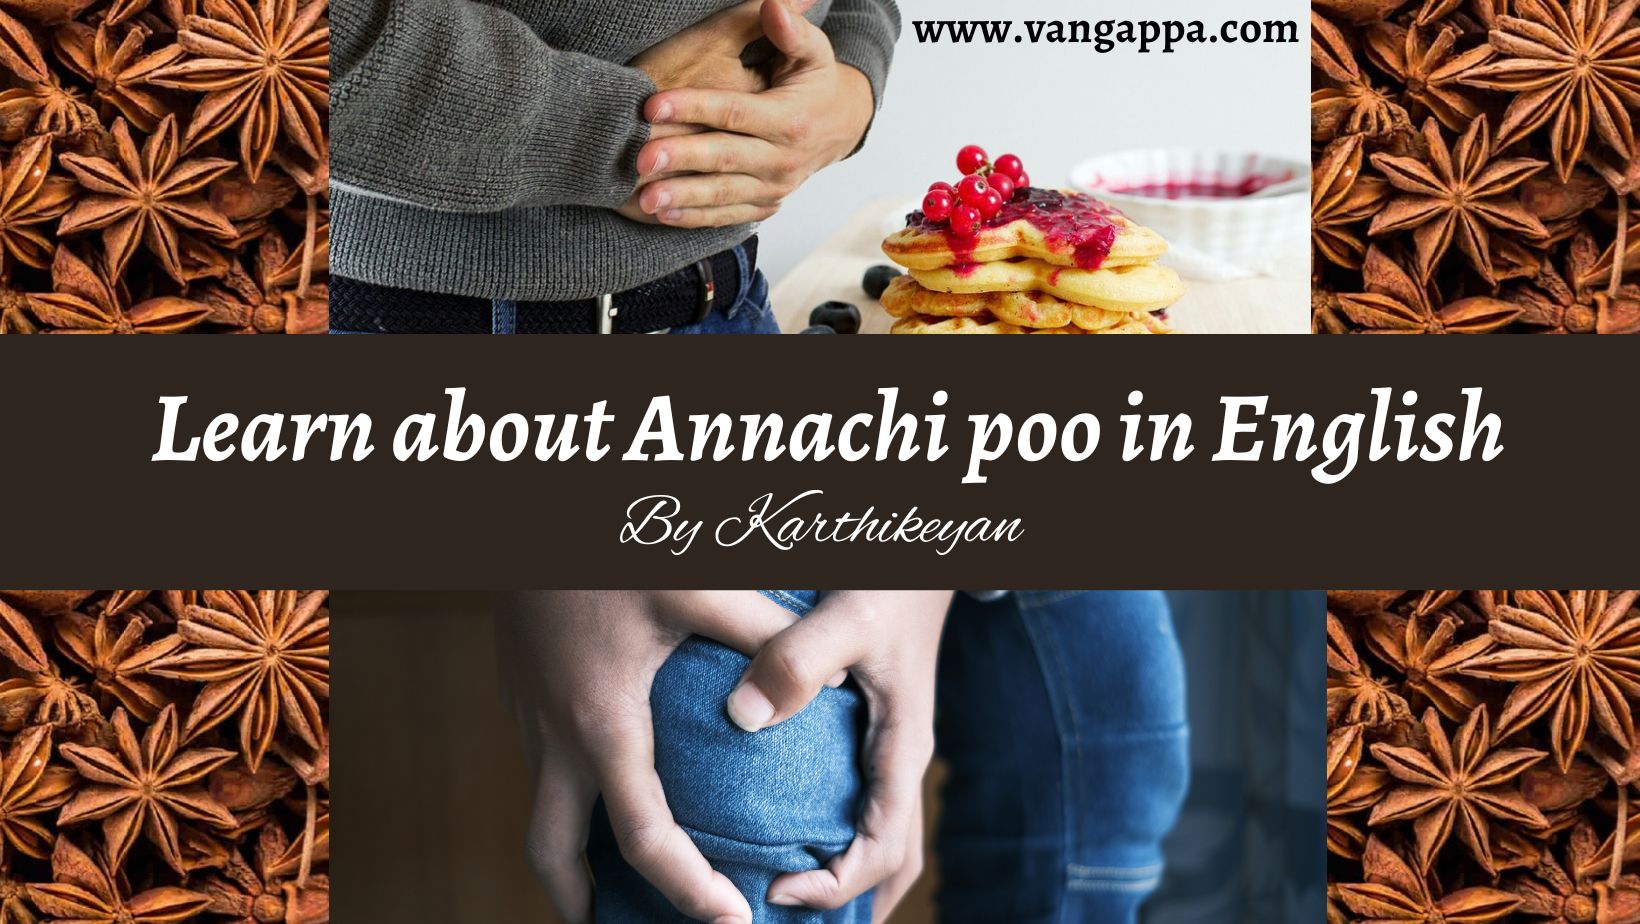 Annachi poo in English